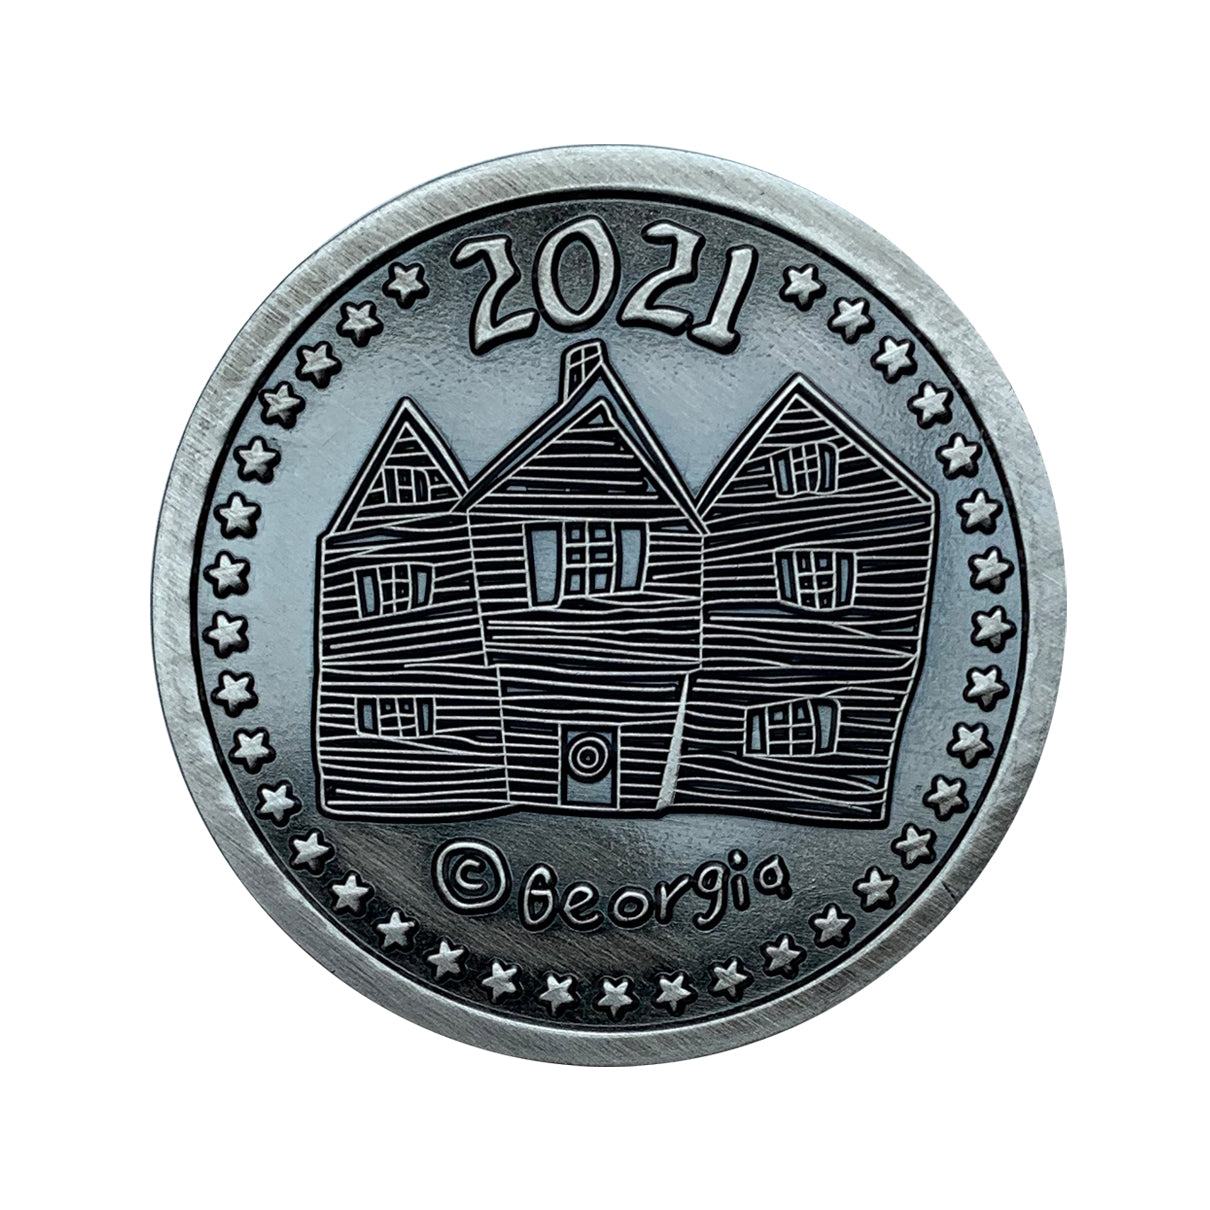 Salem, Massachusetts 2021 Commemorative Coin